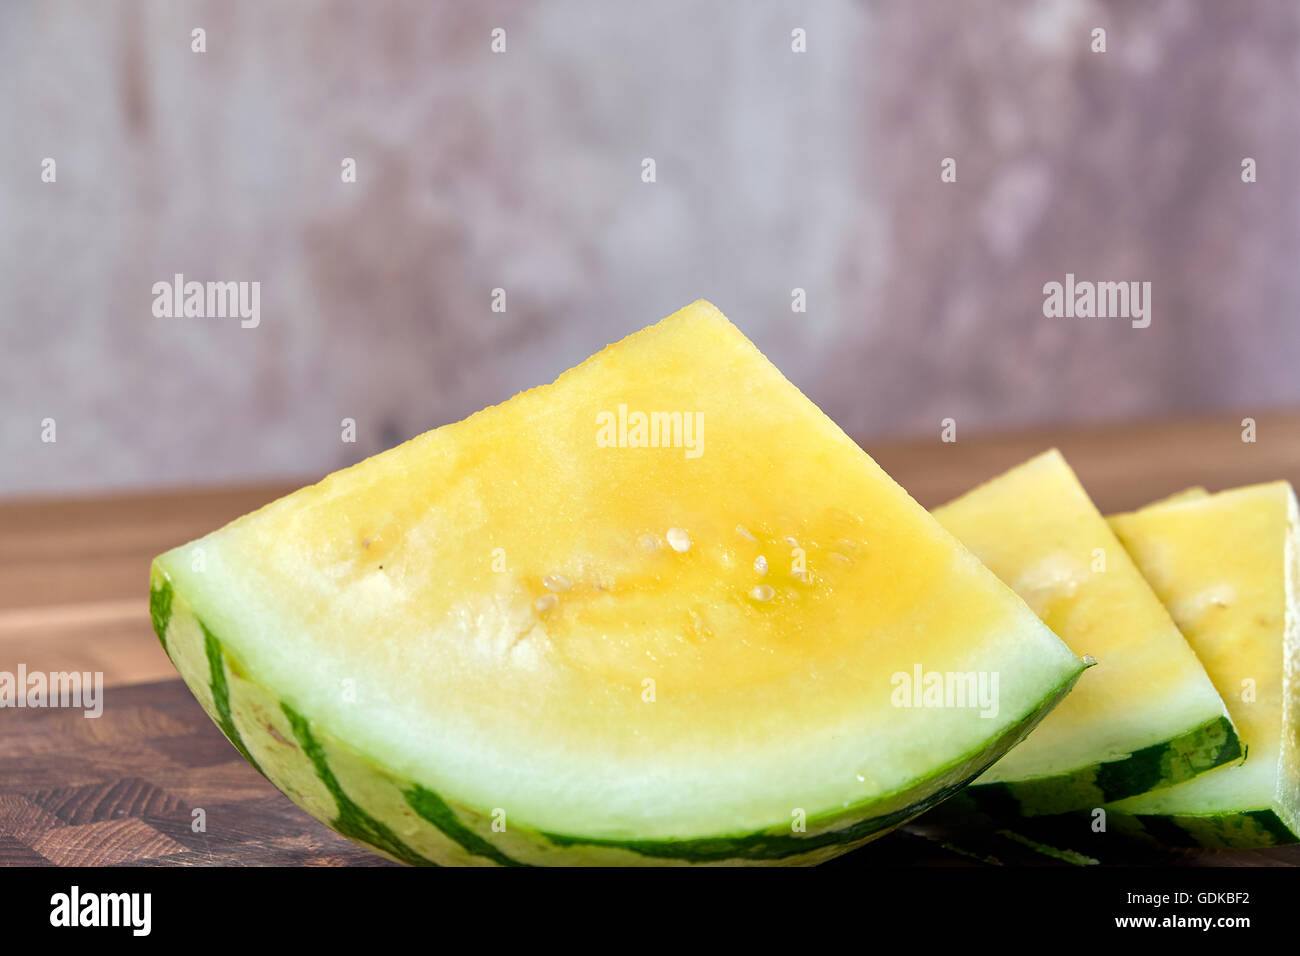 Yellow watermelon slice, lying on a table of dark brown laminated hardwood Stock Photo